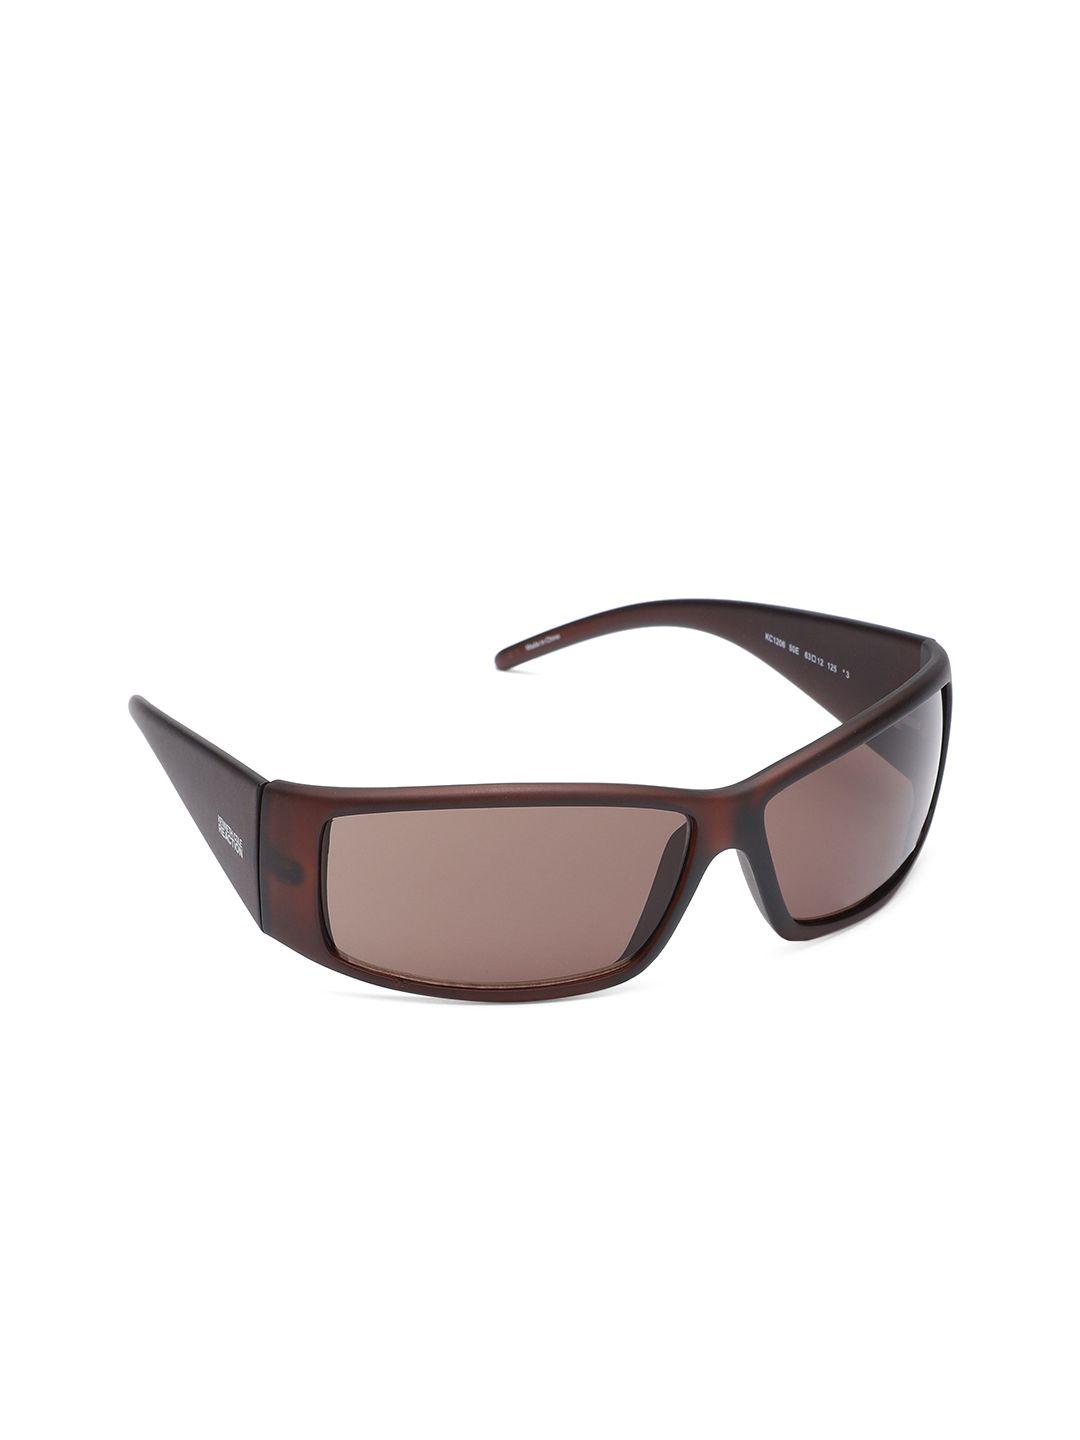 kenneth cole unisex brown rectangle sunglasses kc1206 63 50e